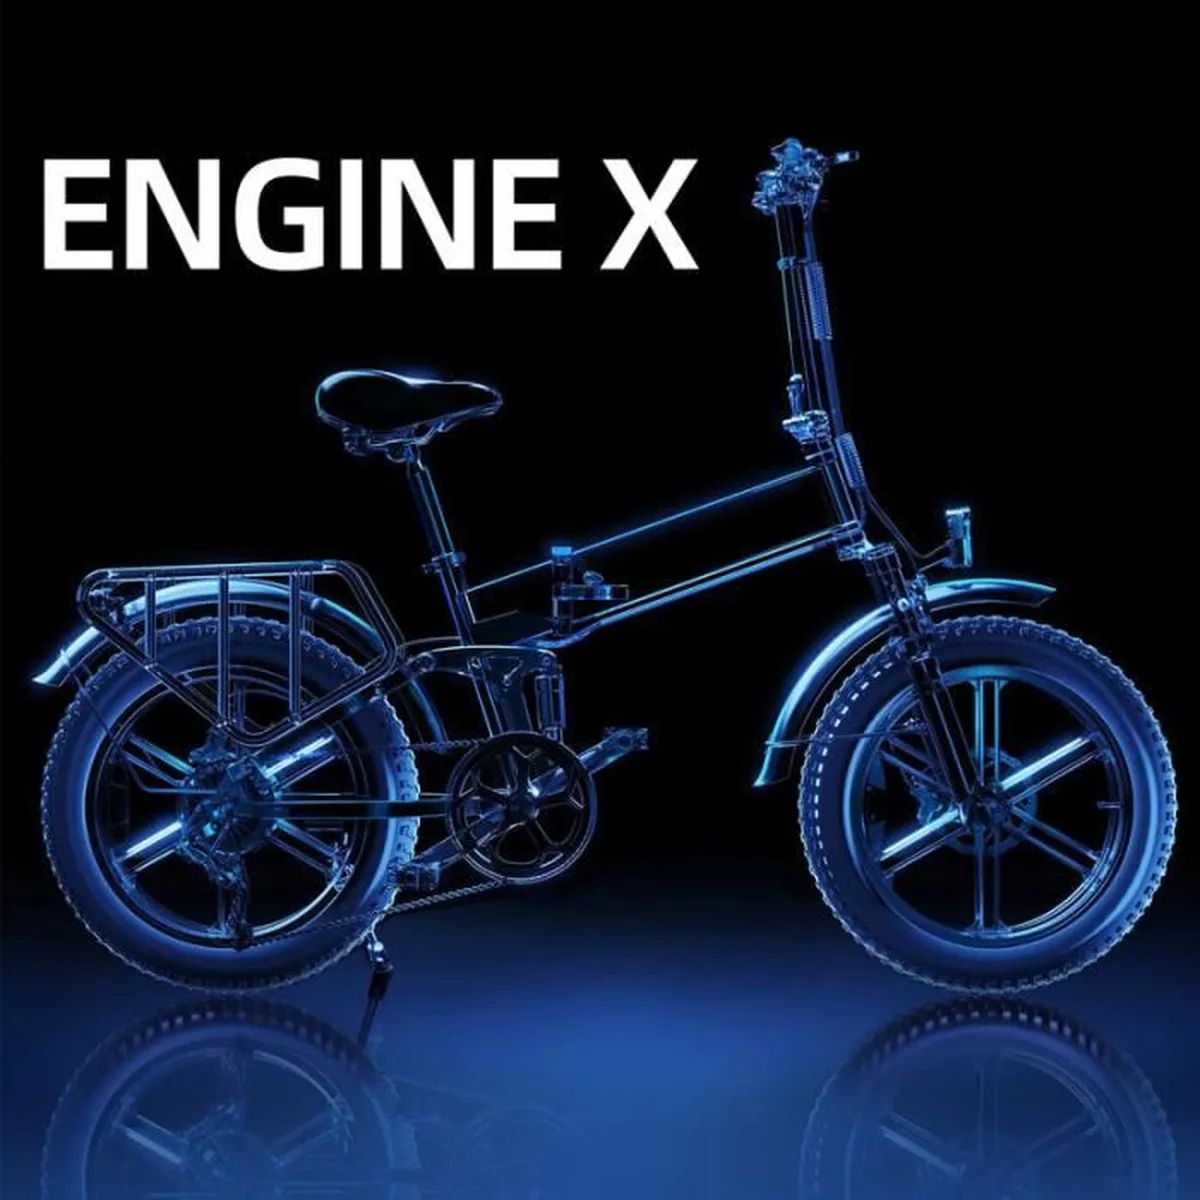 ENGWE ENGINE X - 250W Motor, 624WH Battery, 60KM Range, Disc Brakes, Black